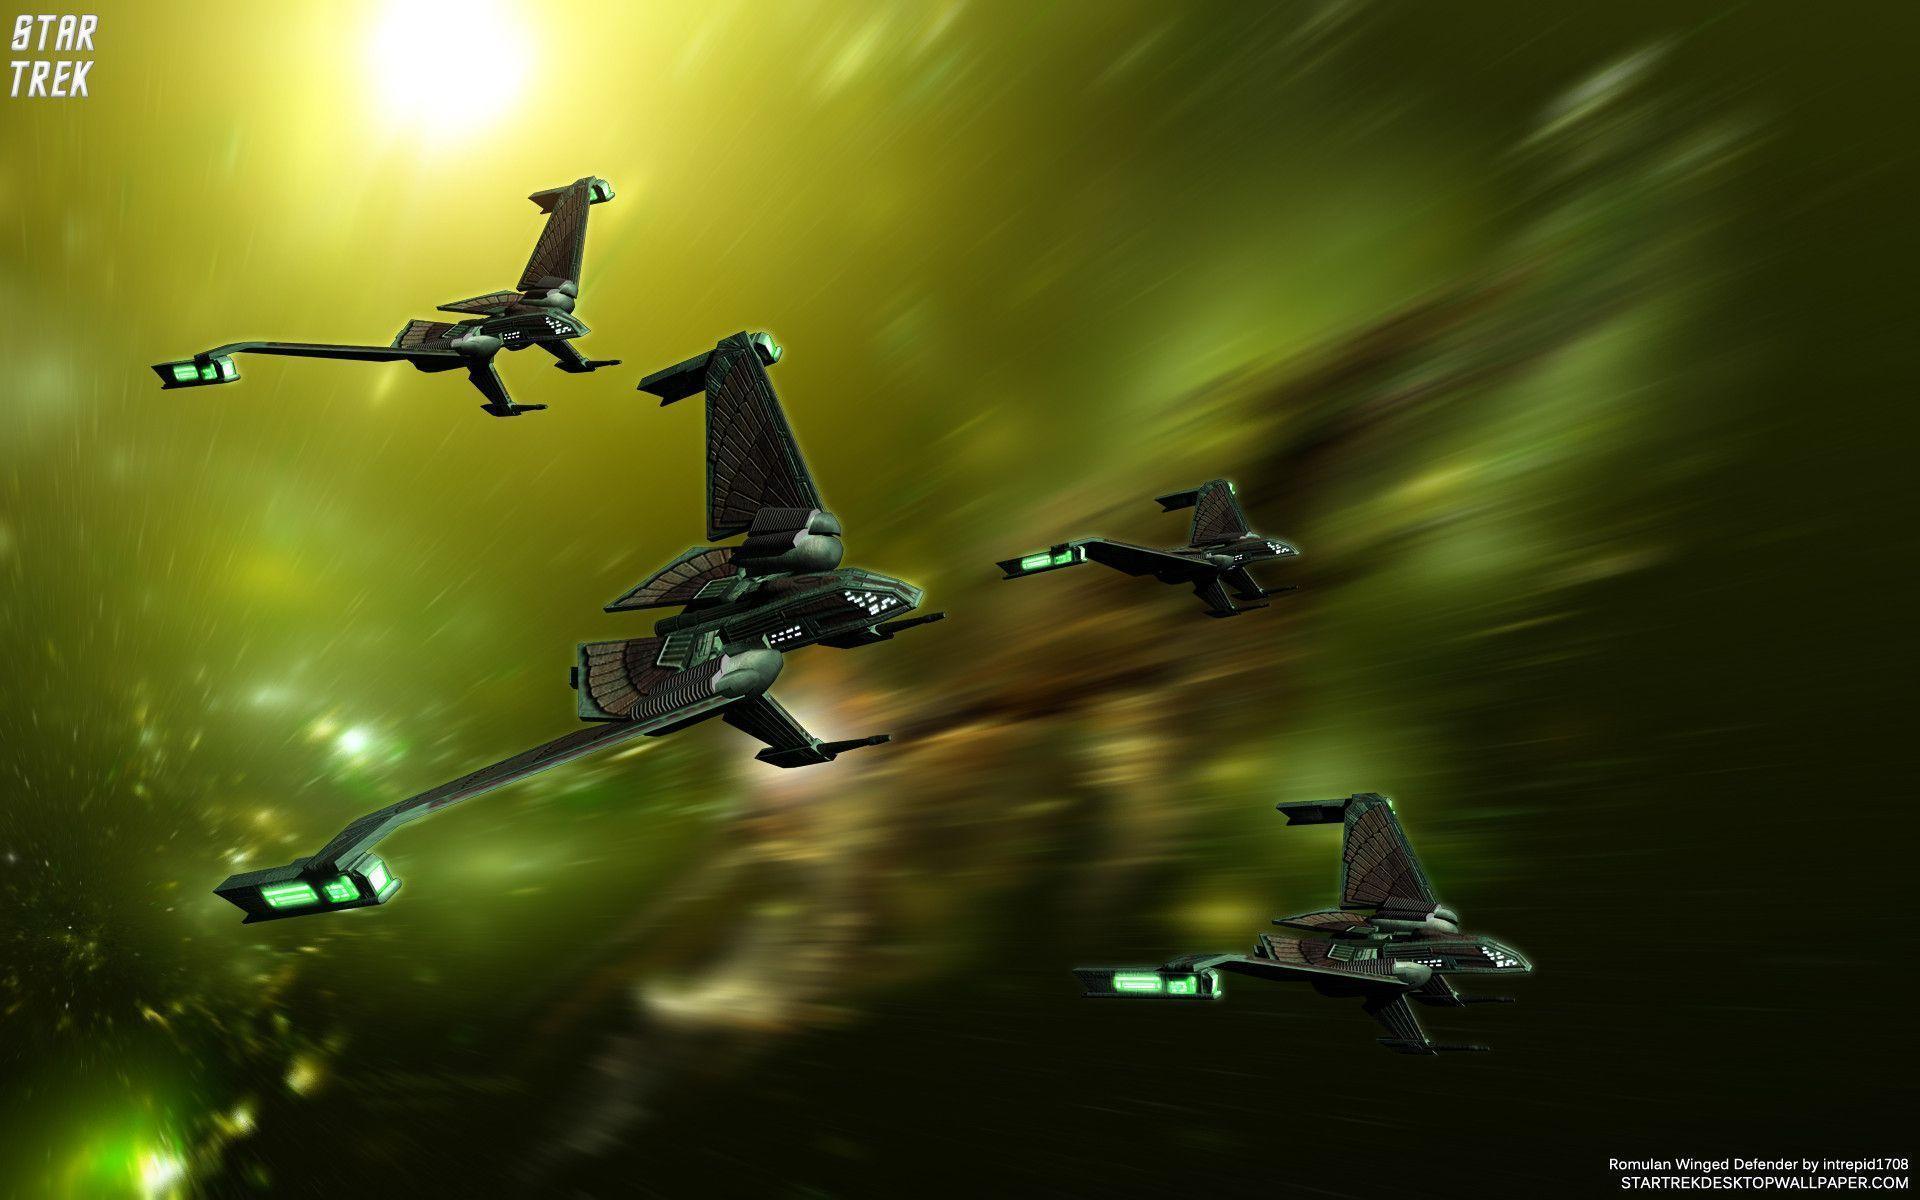 Star Trek Romulan Winged Defender, free Star Trek computer desktop